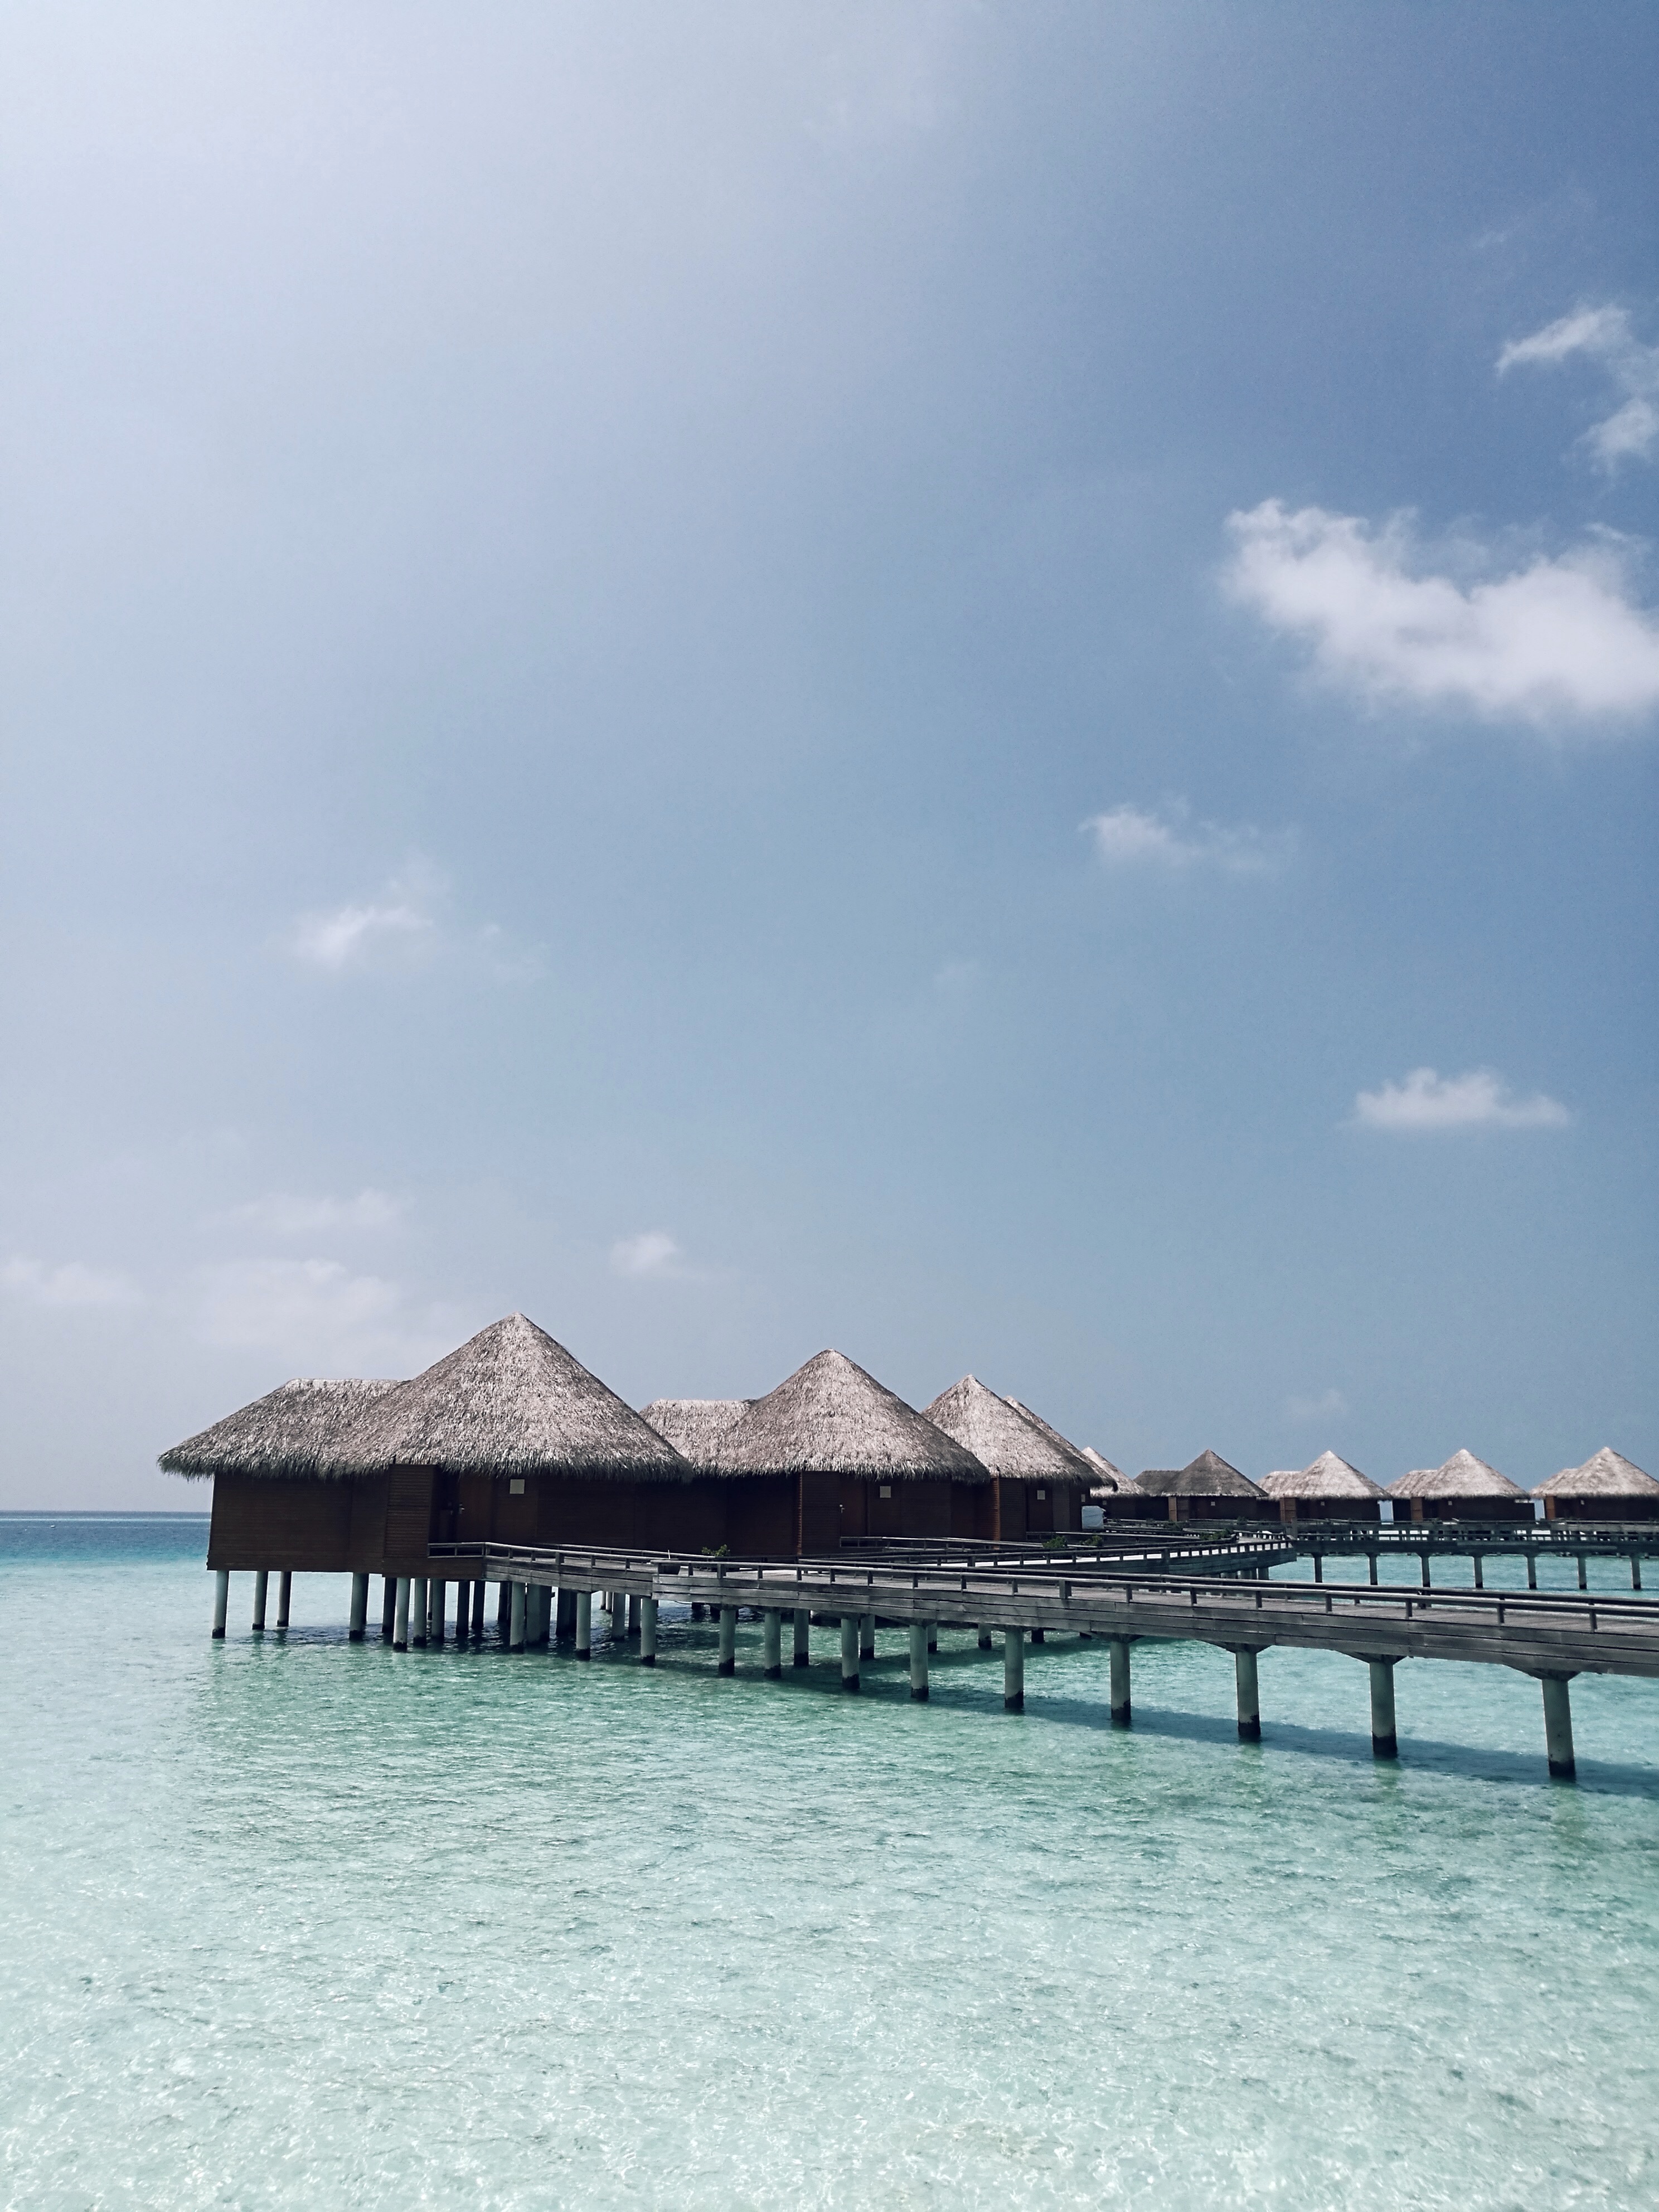 Baros-maldives-blue-skies-january-kuoni